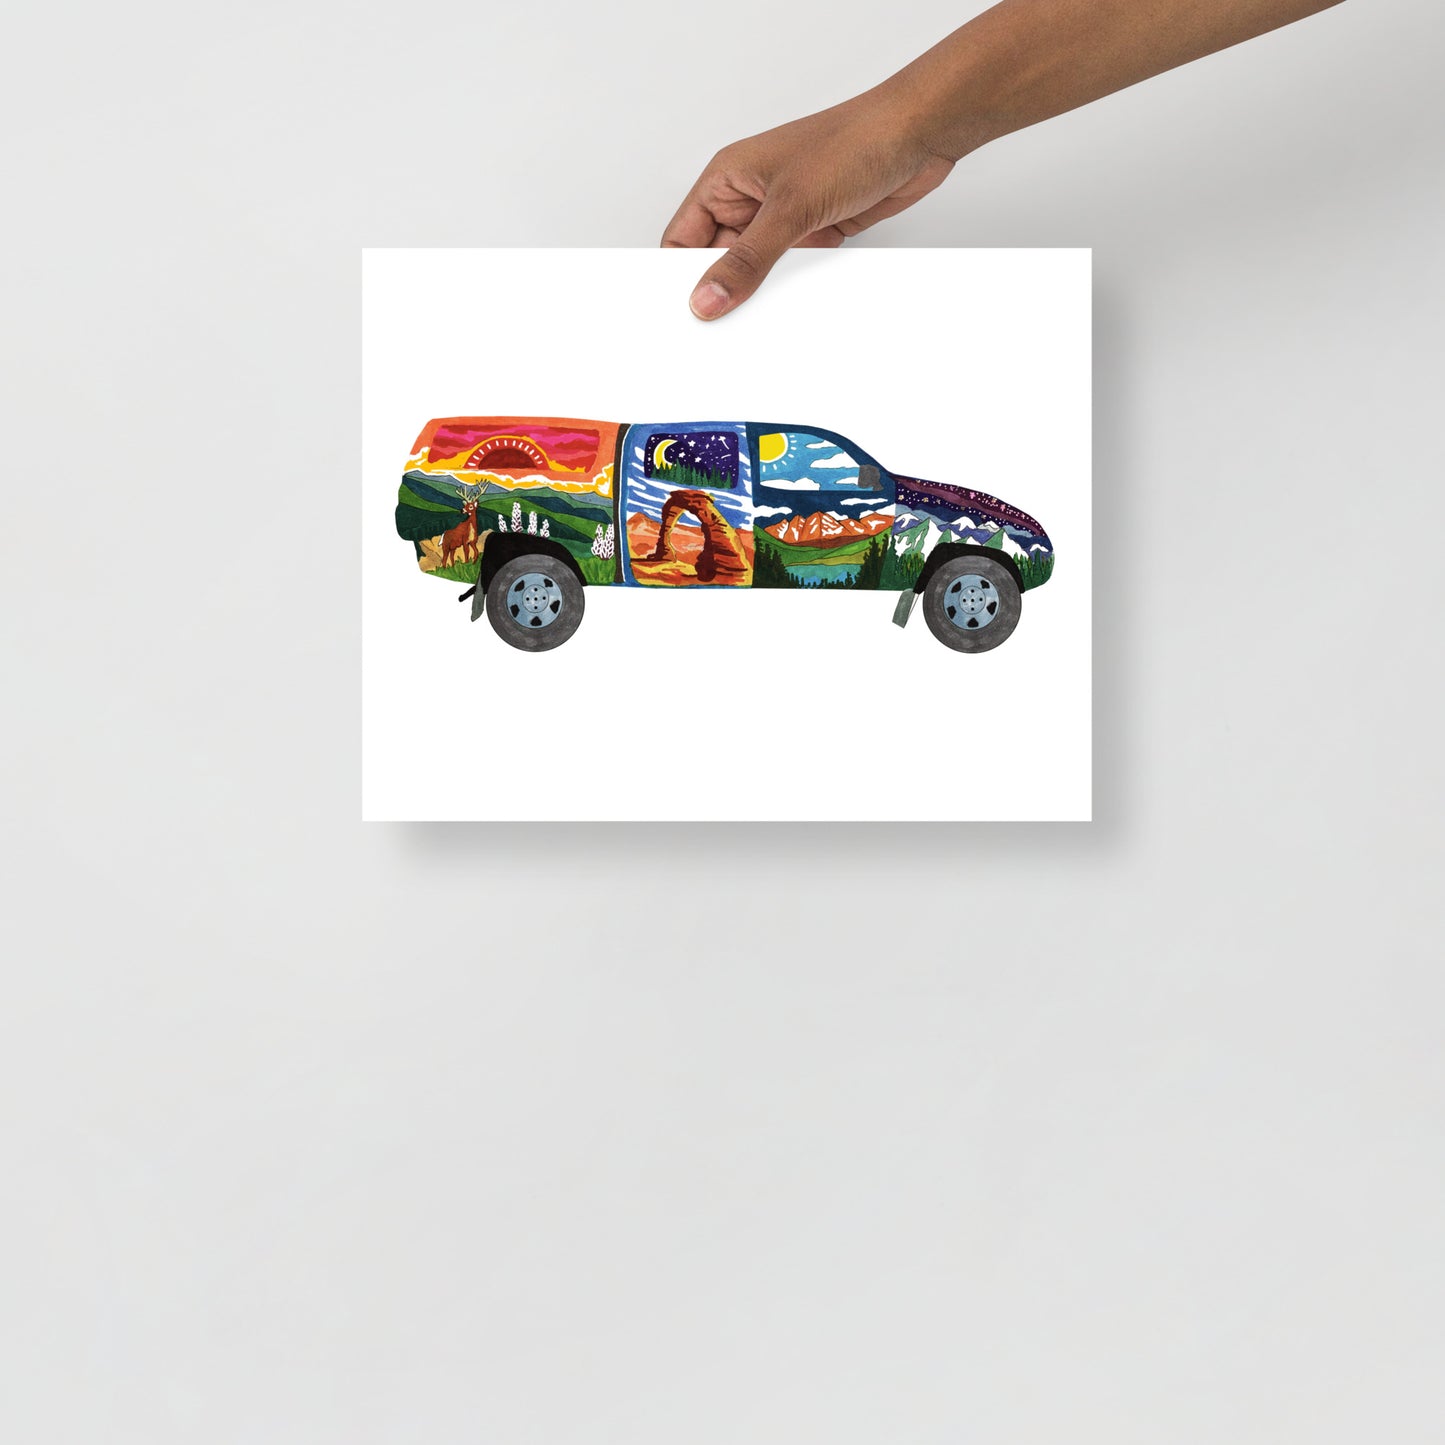 Groovy Prints: "Truck Life"